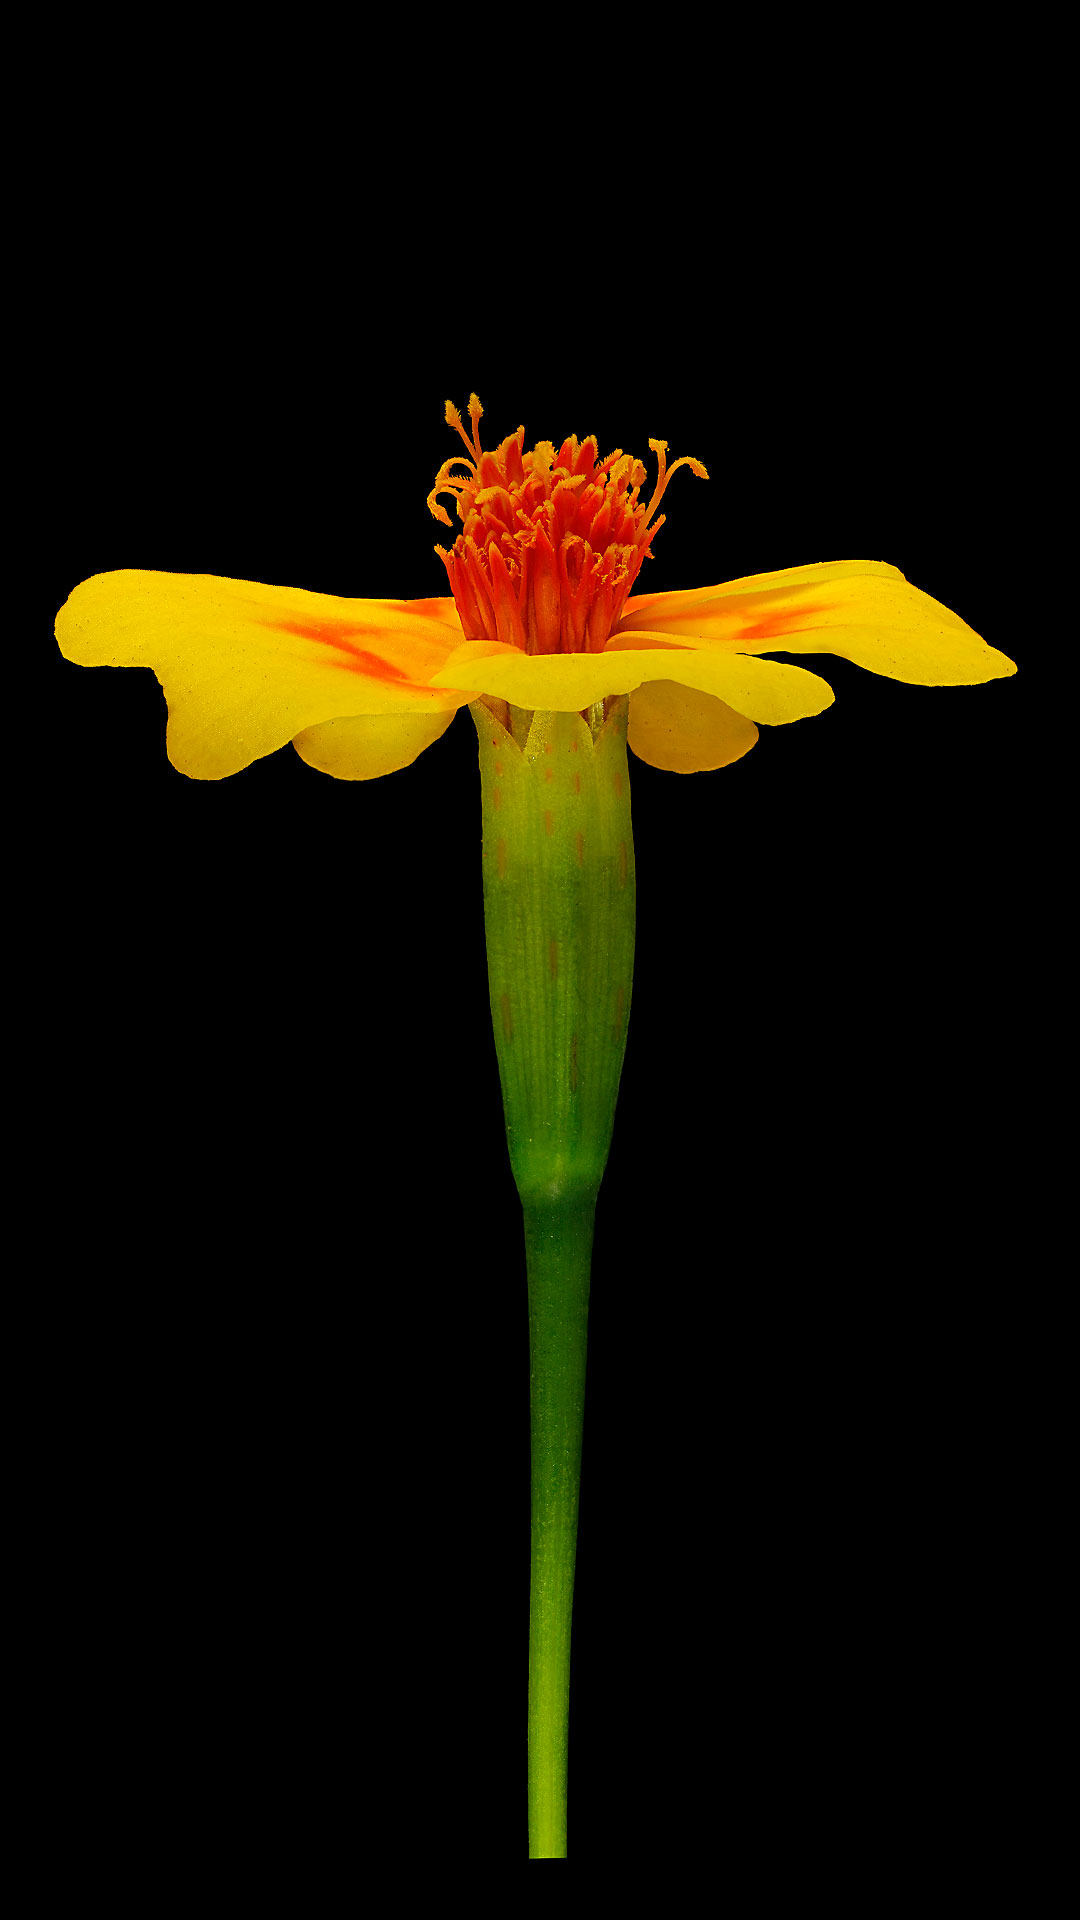 Golden marigold: Tagetes tenuifolia